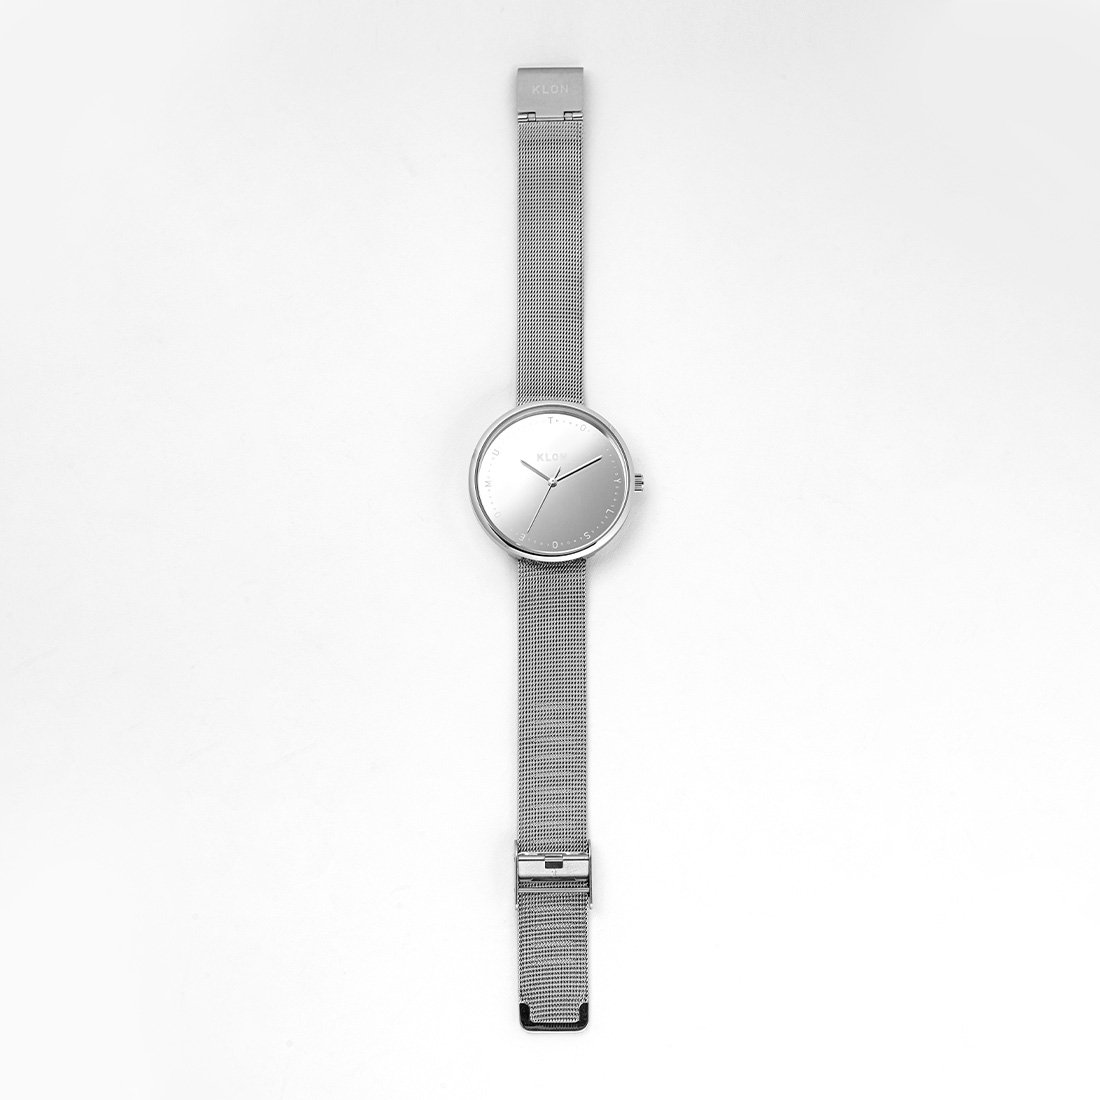 KLON MANYO simply 11T2812 38mm カジュアル 腕時計